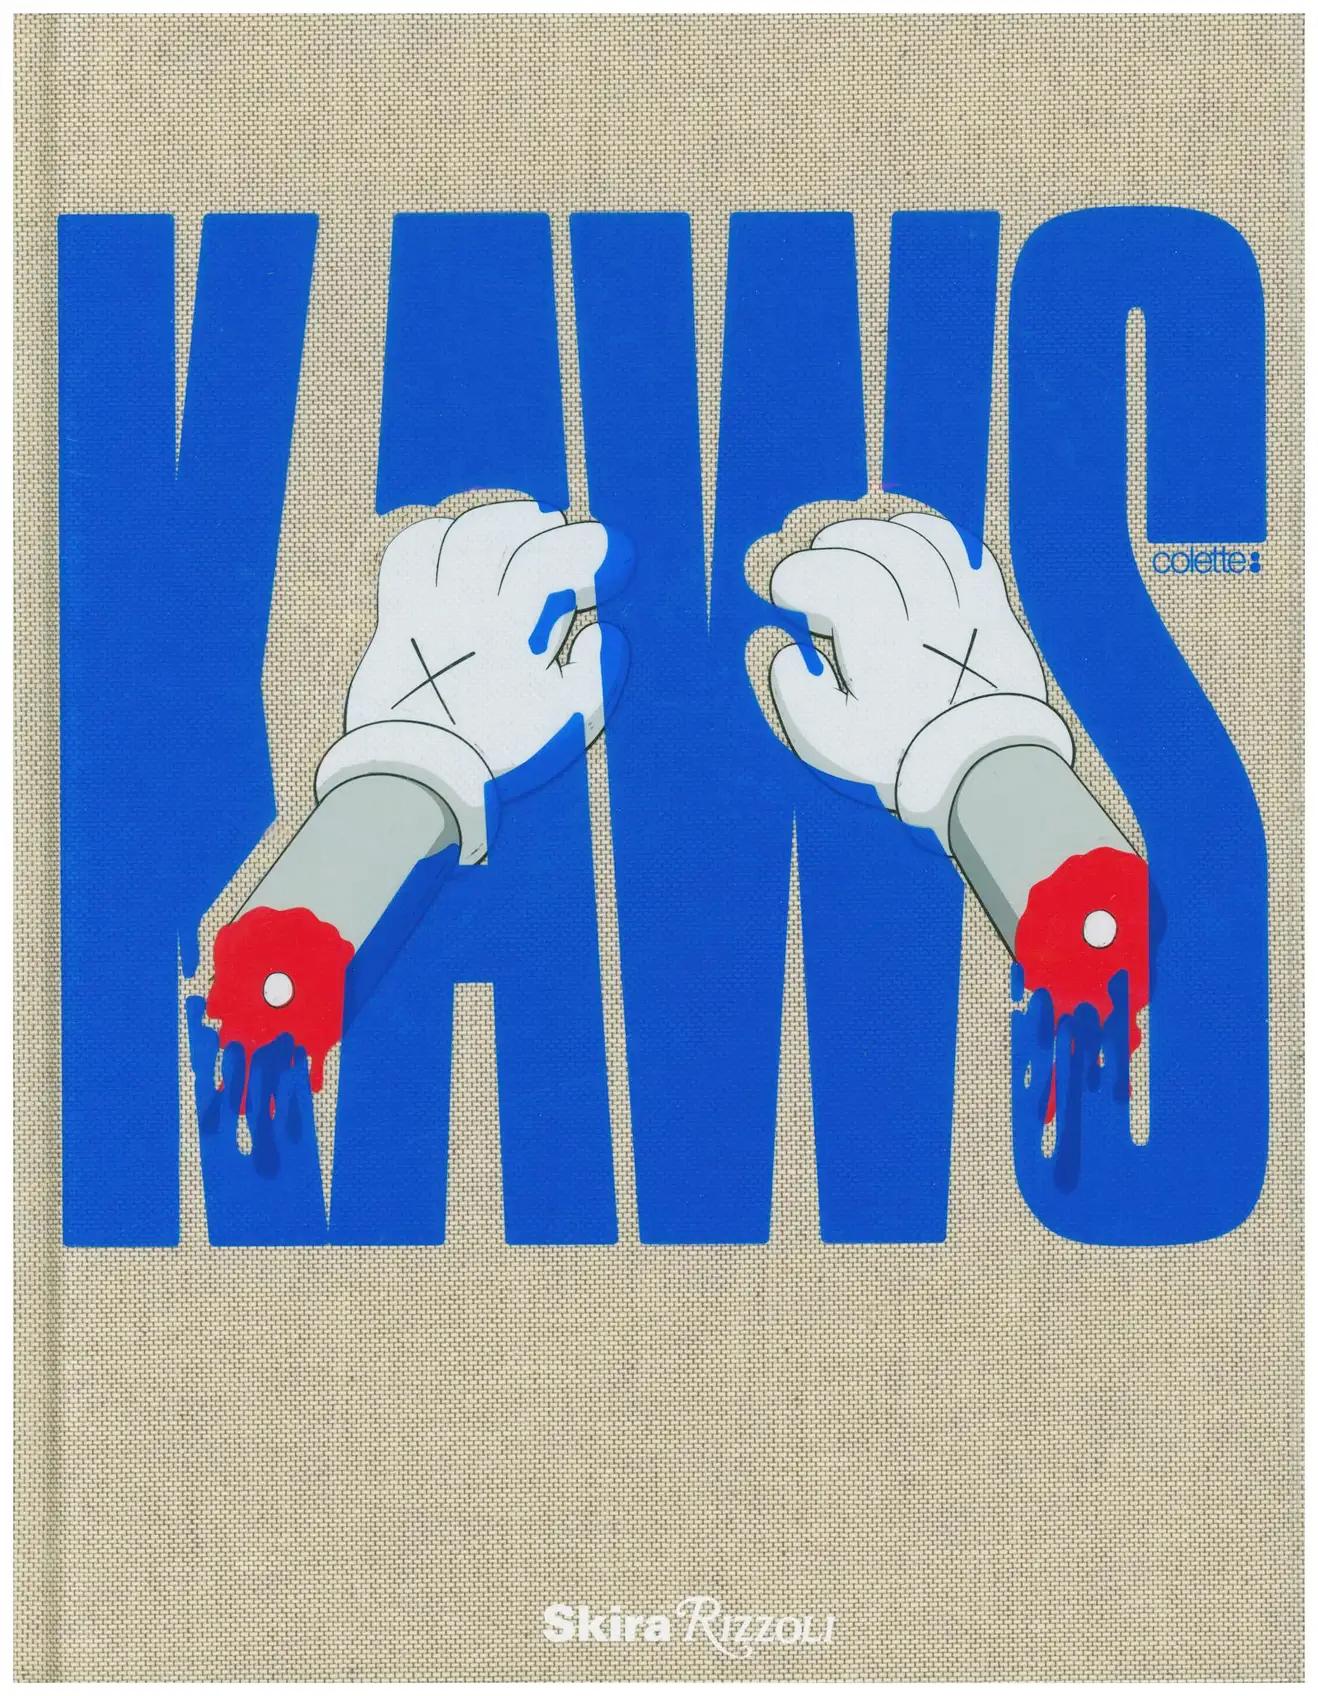 Signed KAWS artist book 2010 (KAWS Colette Rizzoli blue cover)